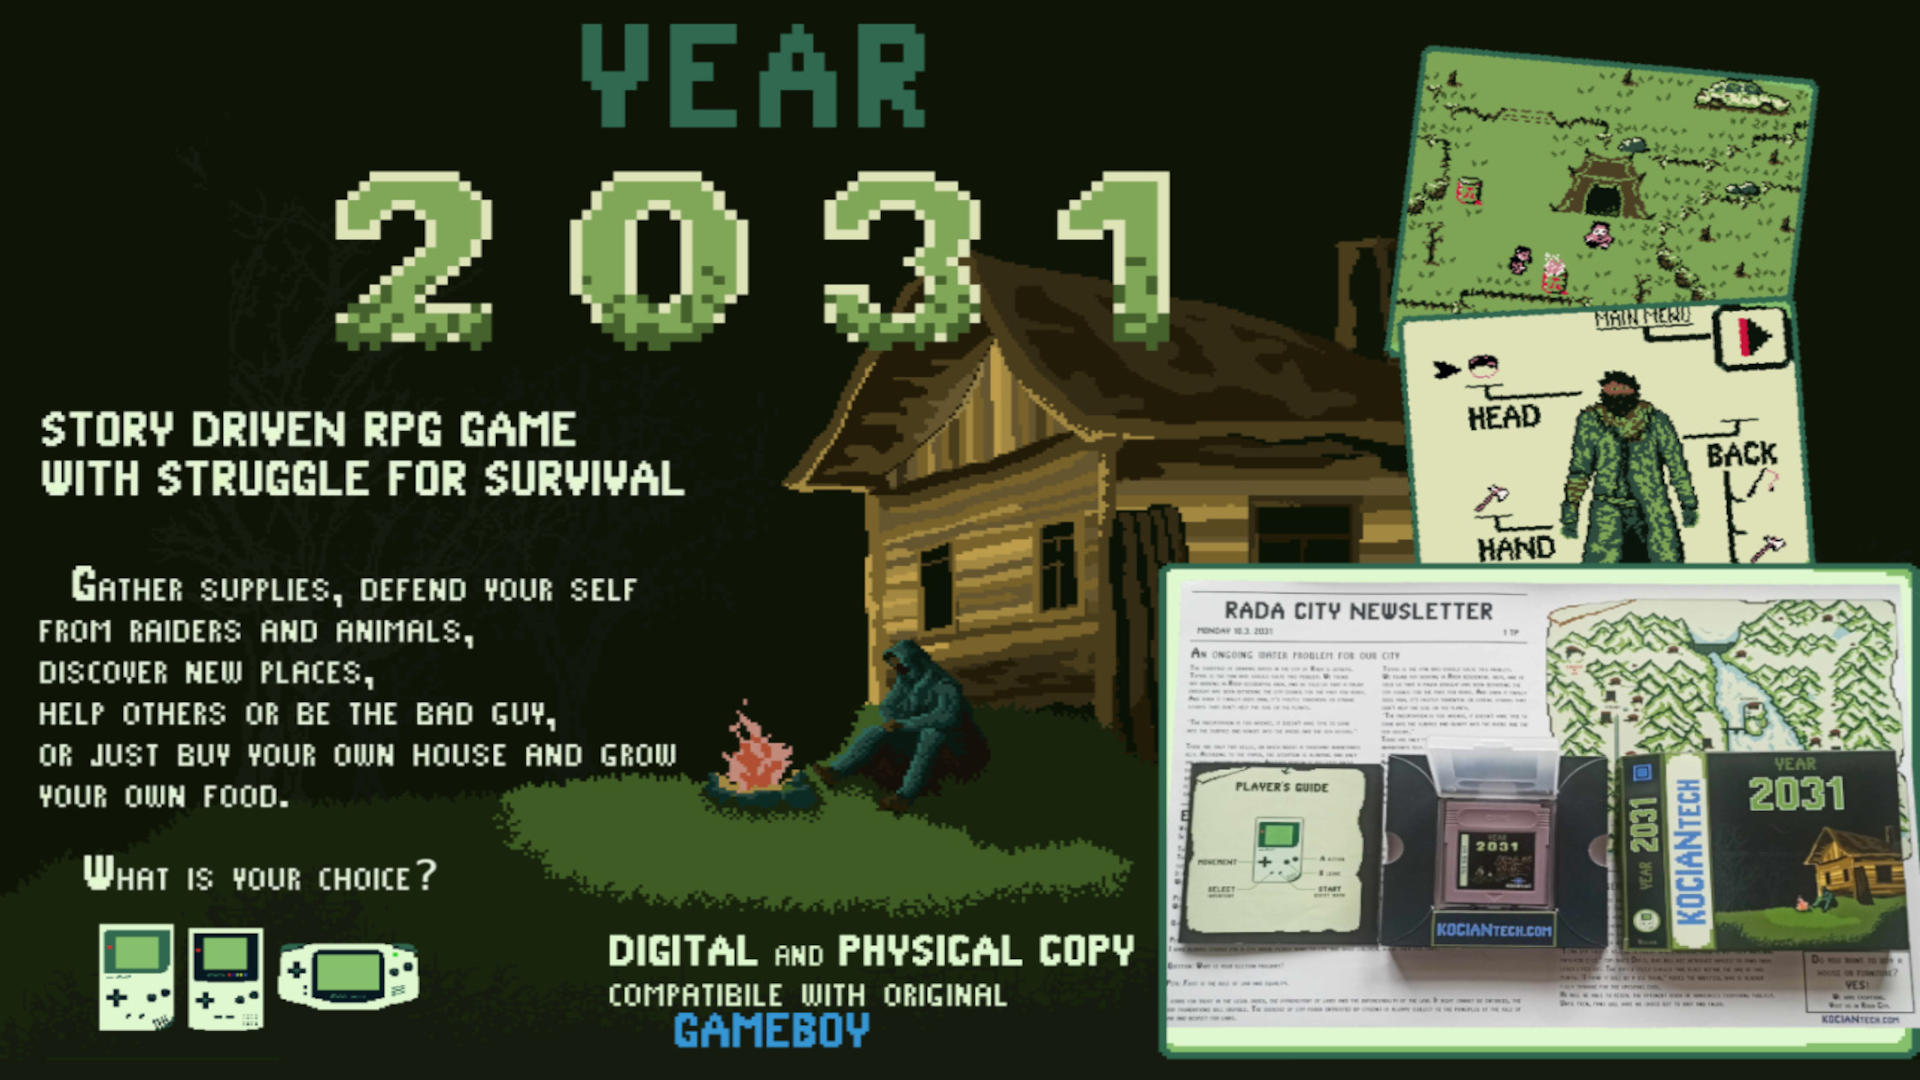 Year 2031 [Game Showcase]